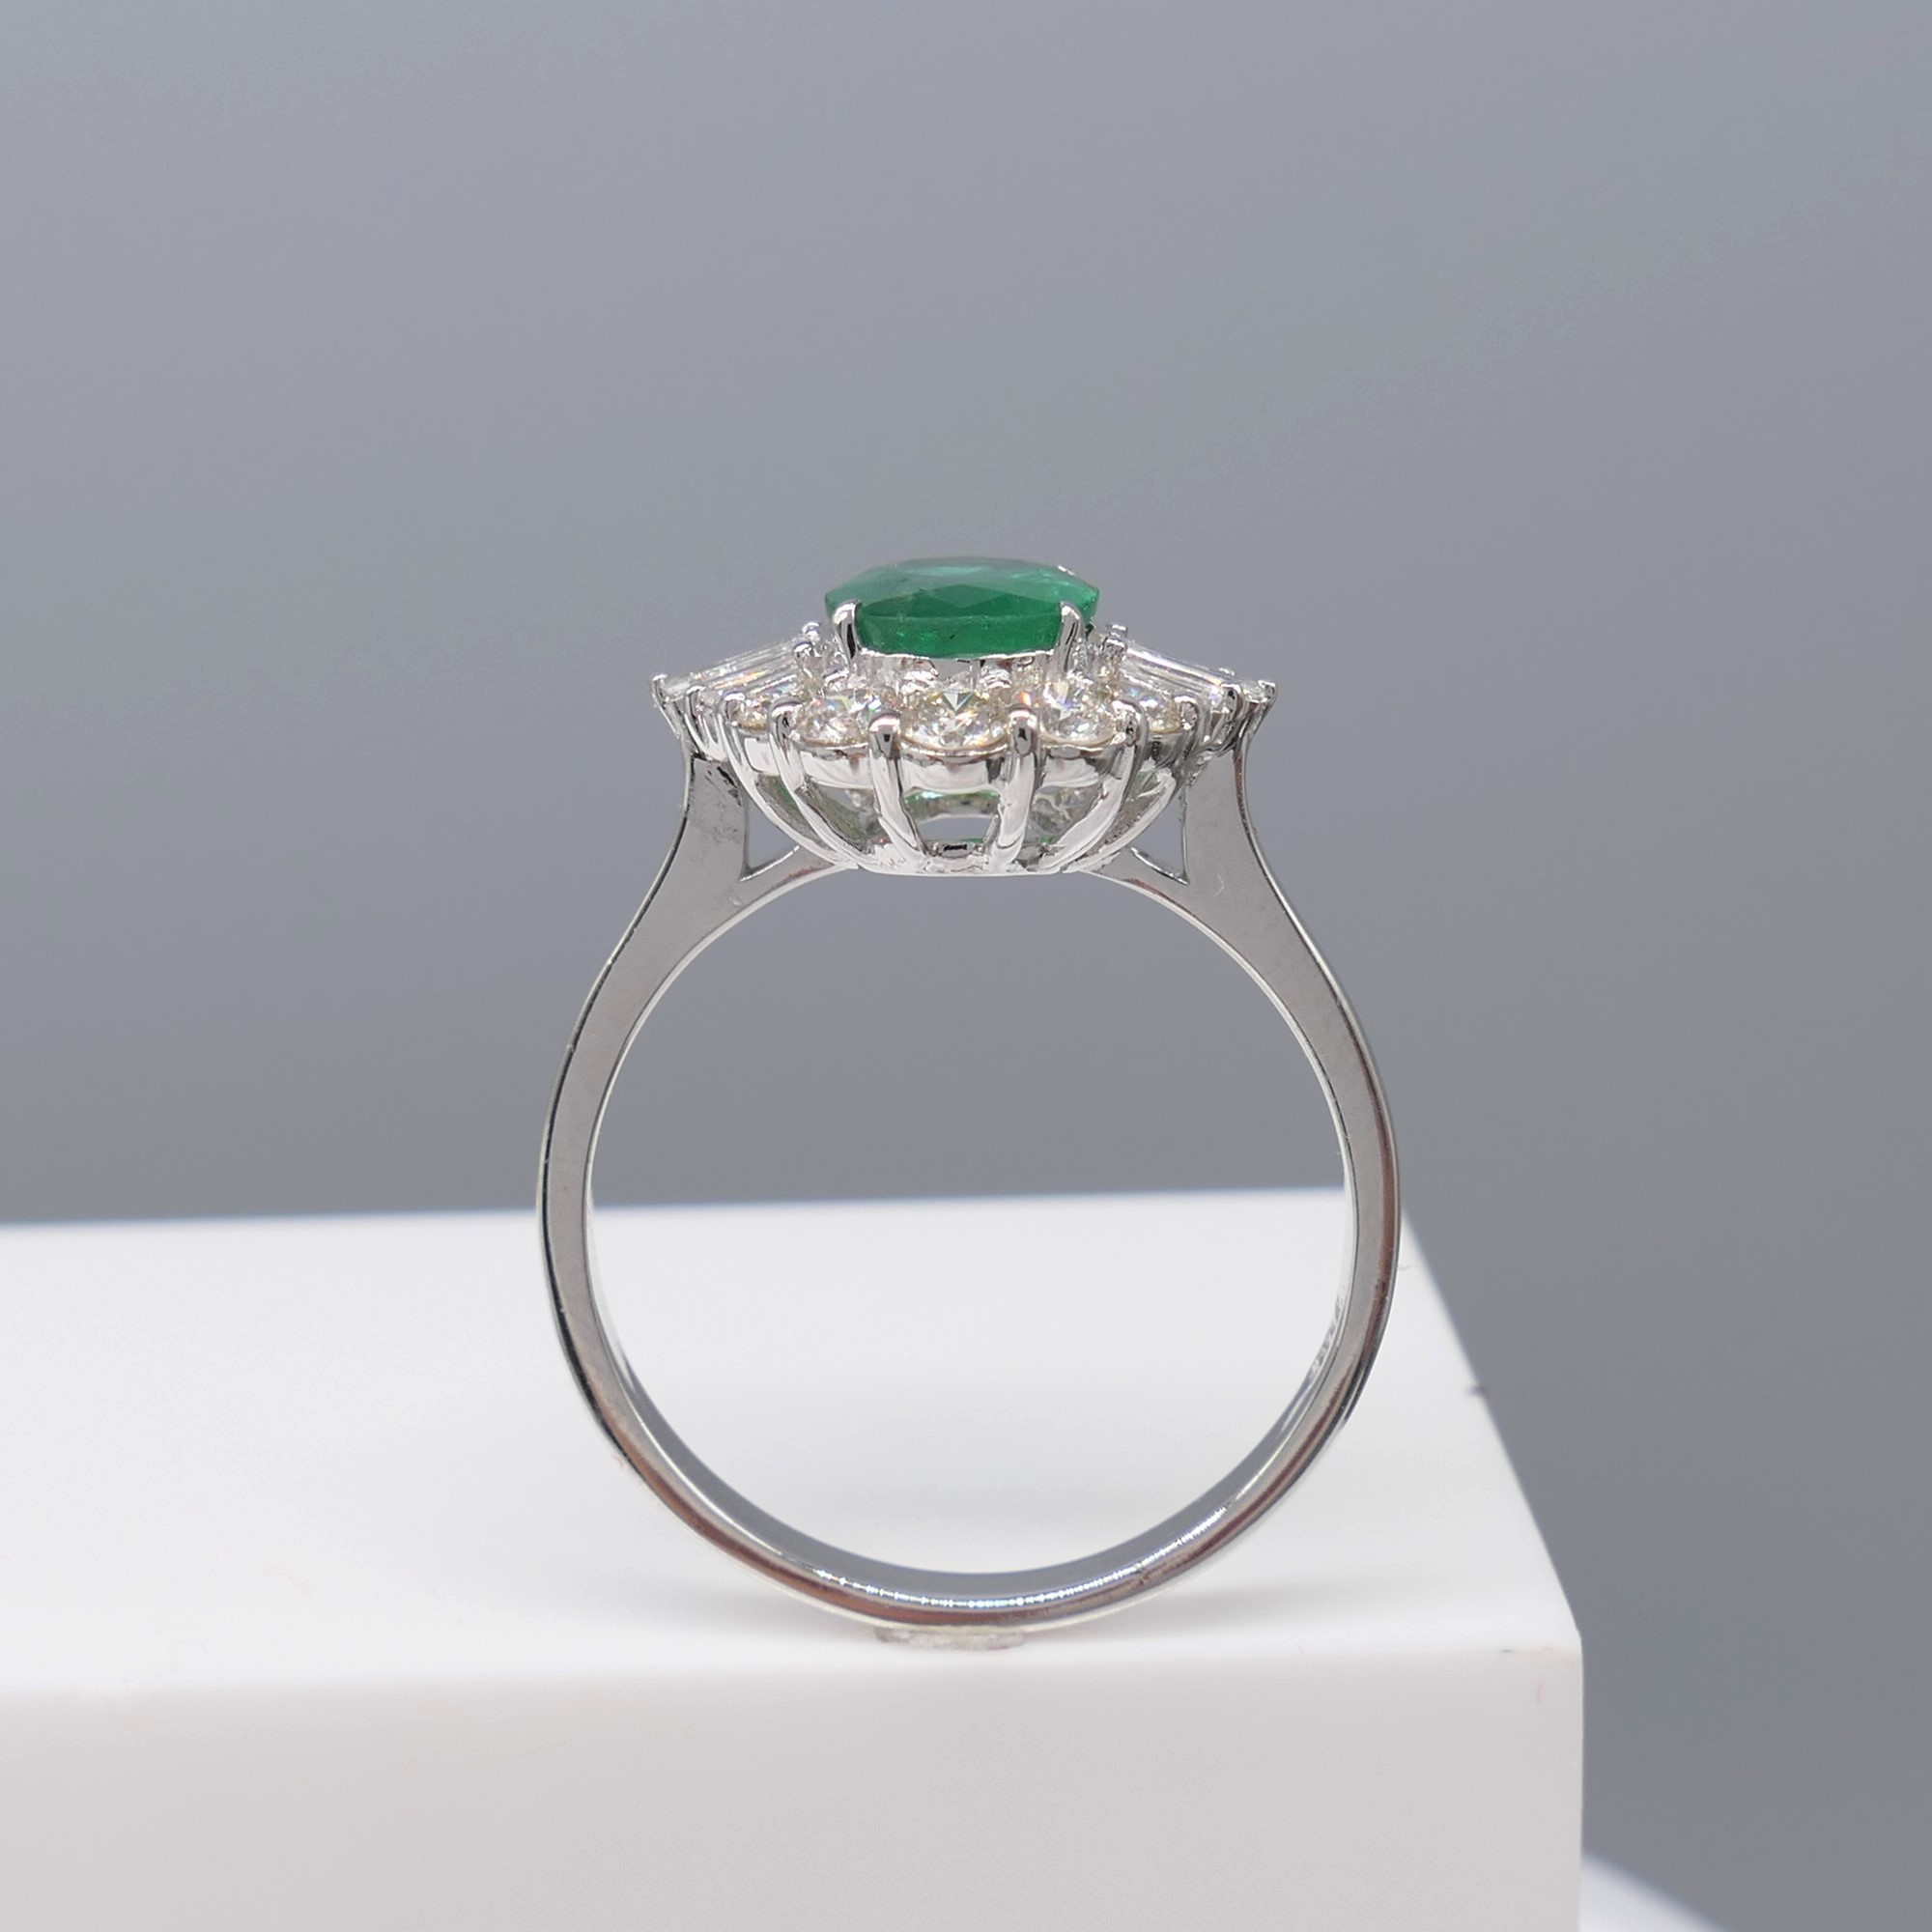 Stylish 1.05 carat emerald and diamond dress ring - Image 5 of 8